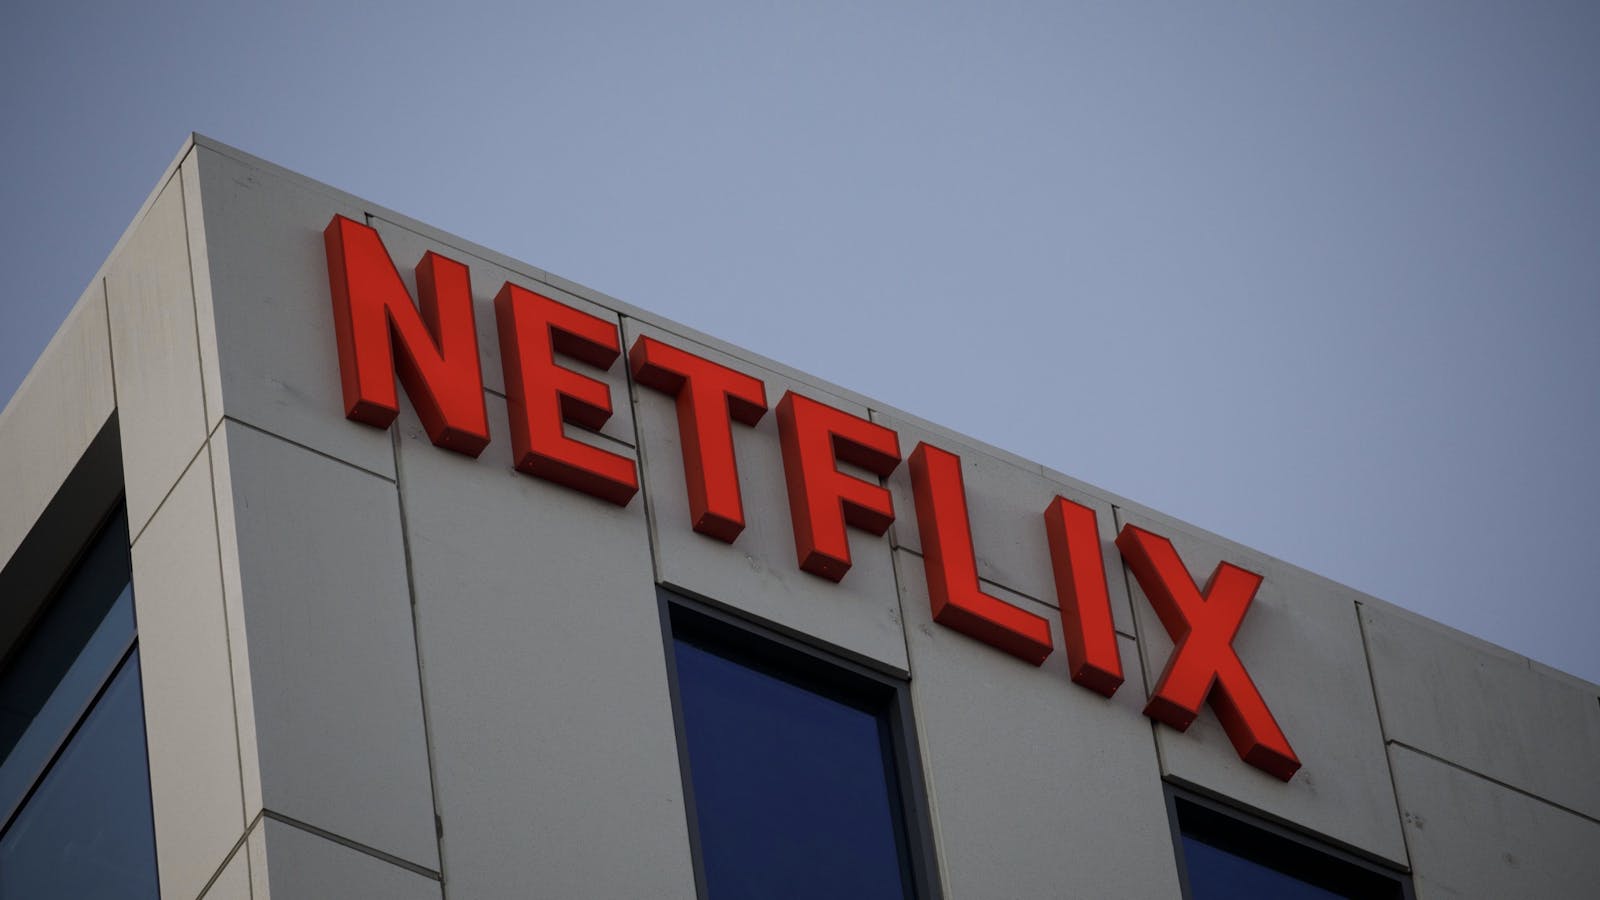 Netflix Passes Major Milestone: The Information's Tech Briefing